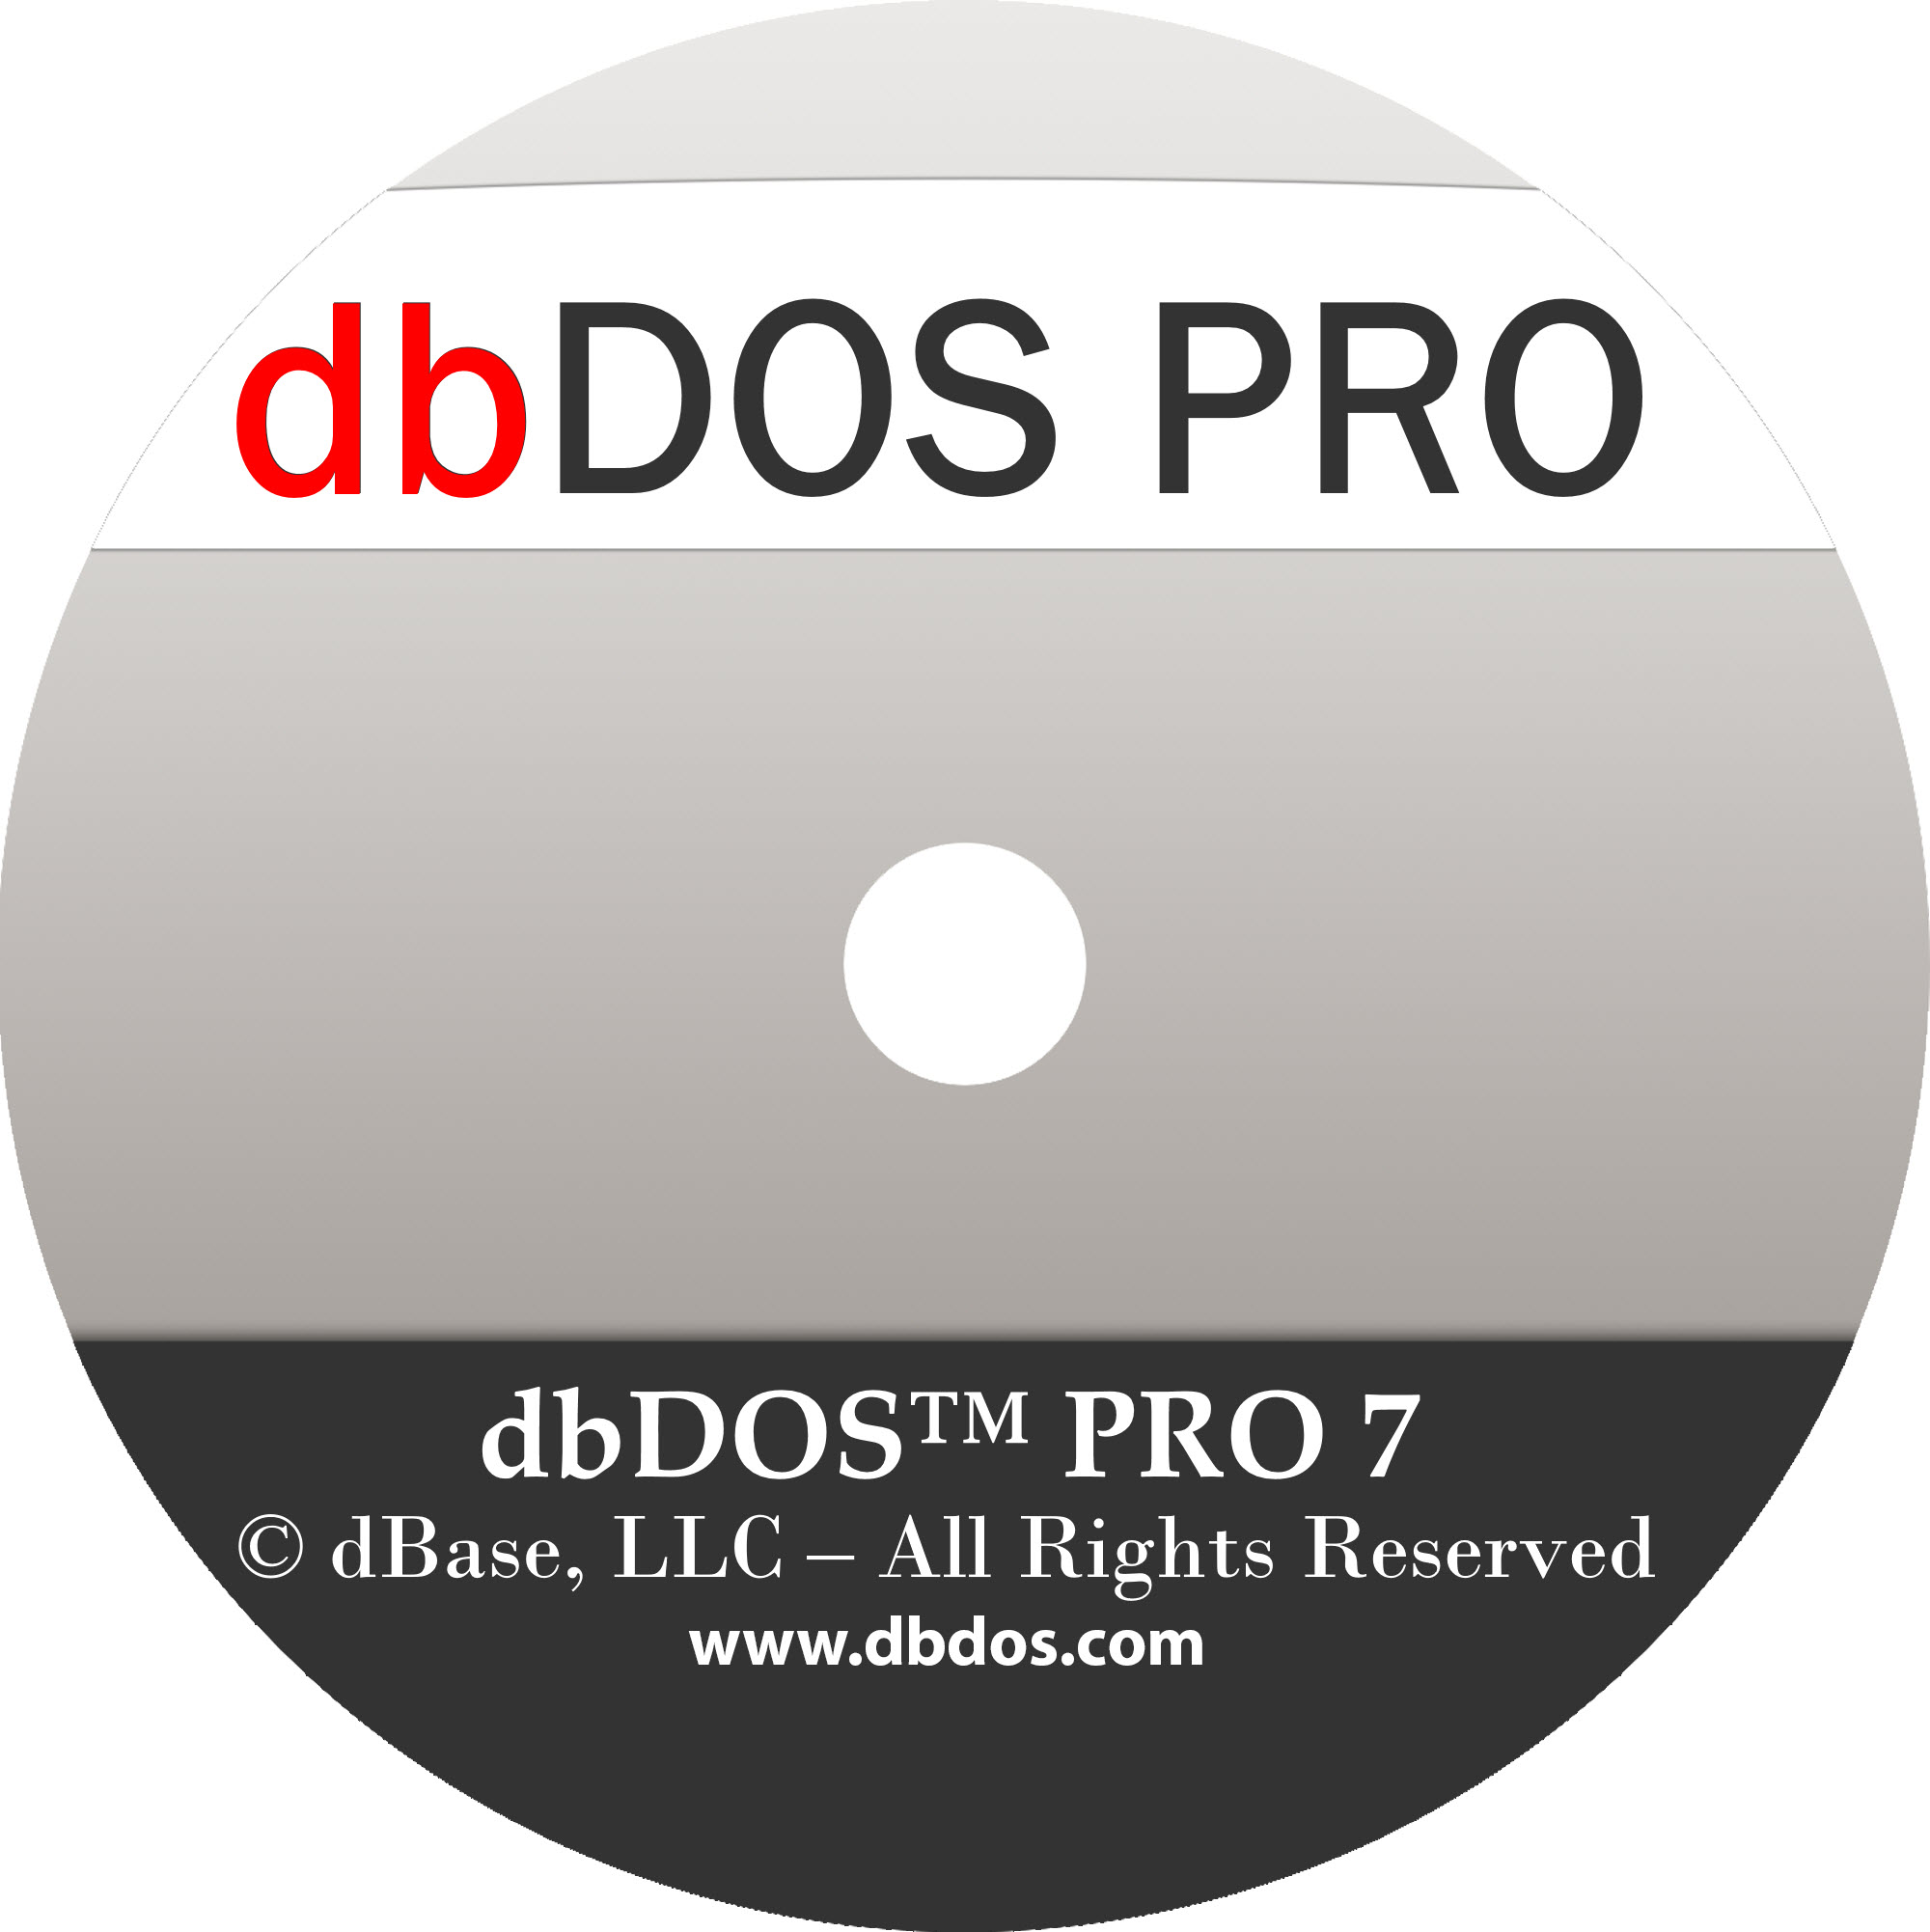 dbDOS PRO 7 CD